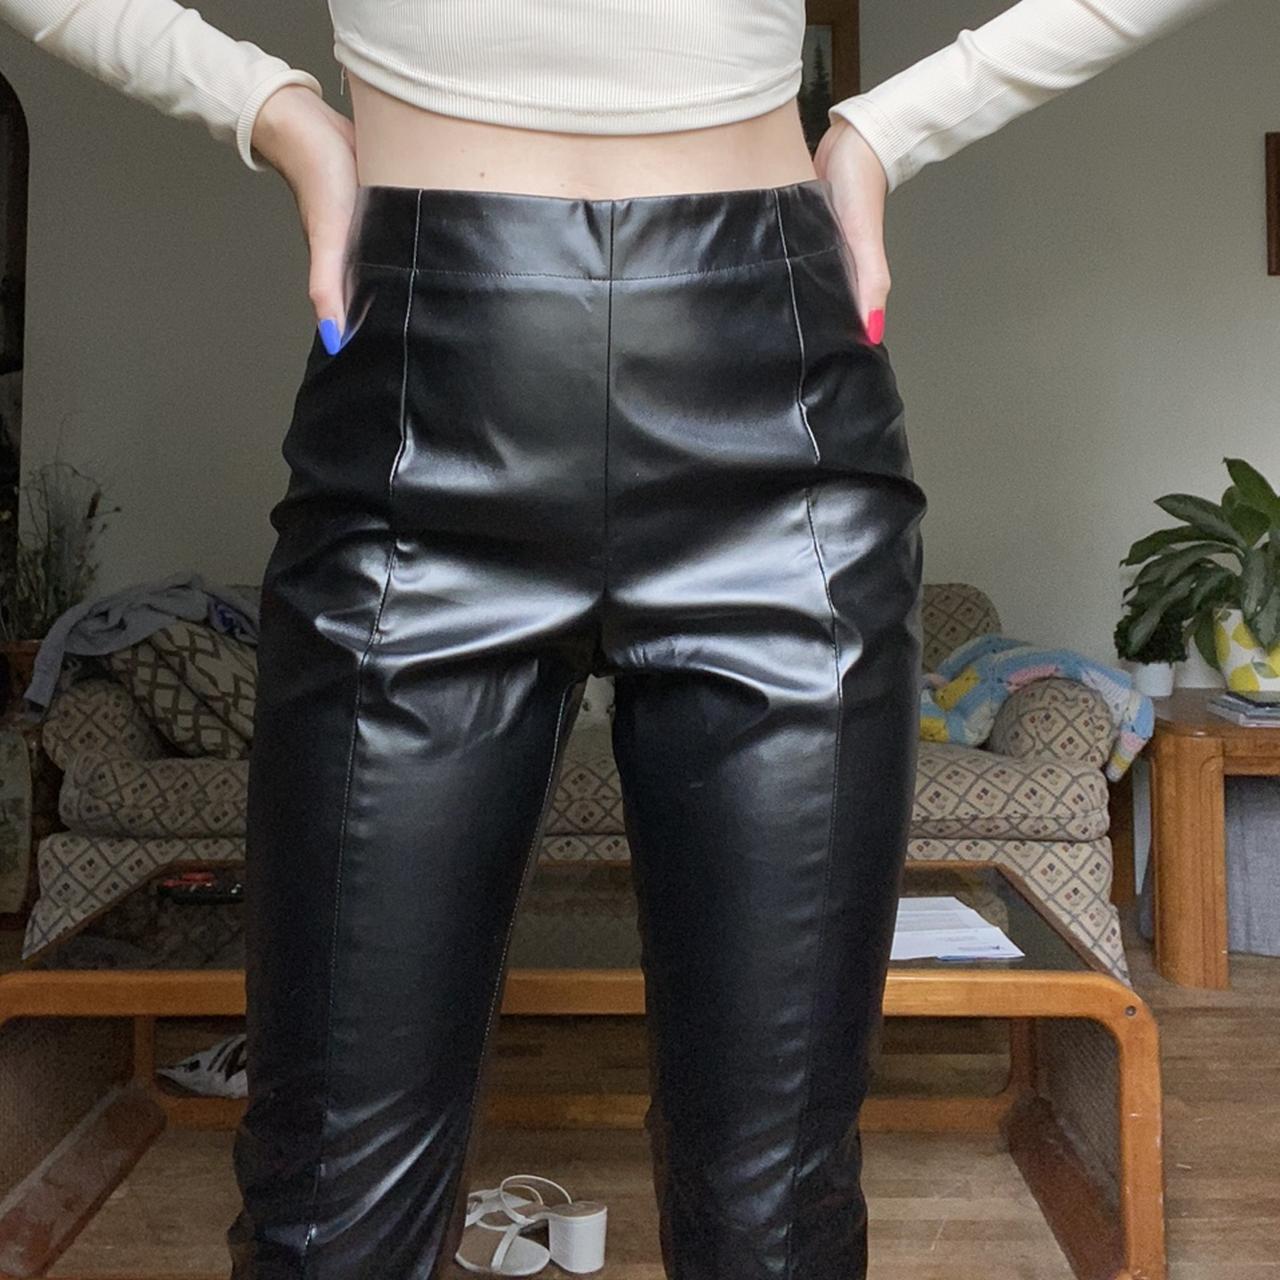 REPOP NWOT fake leather pants size LARGE! Model is... - Depop